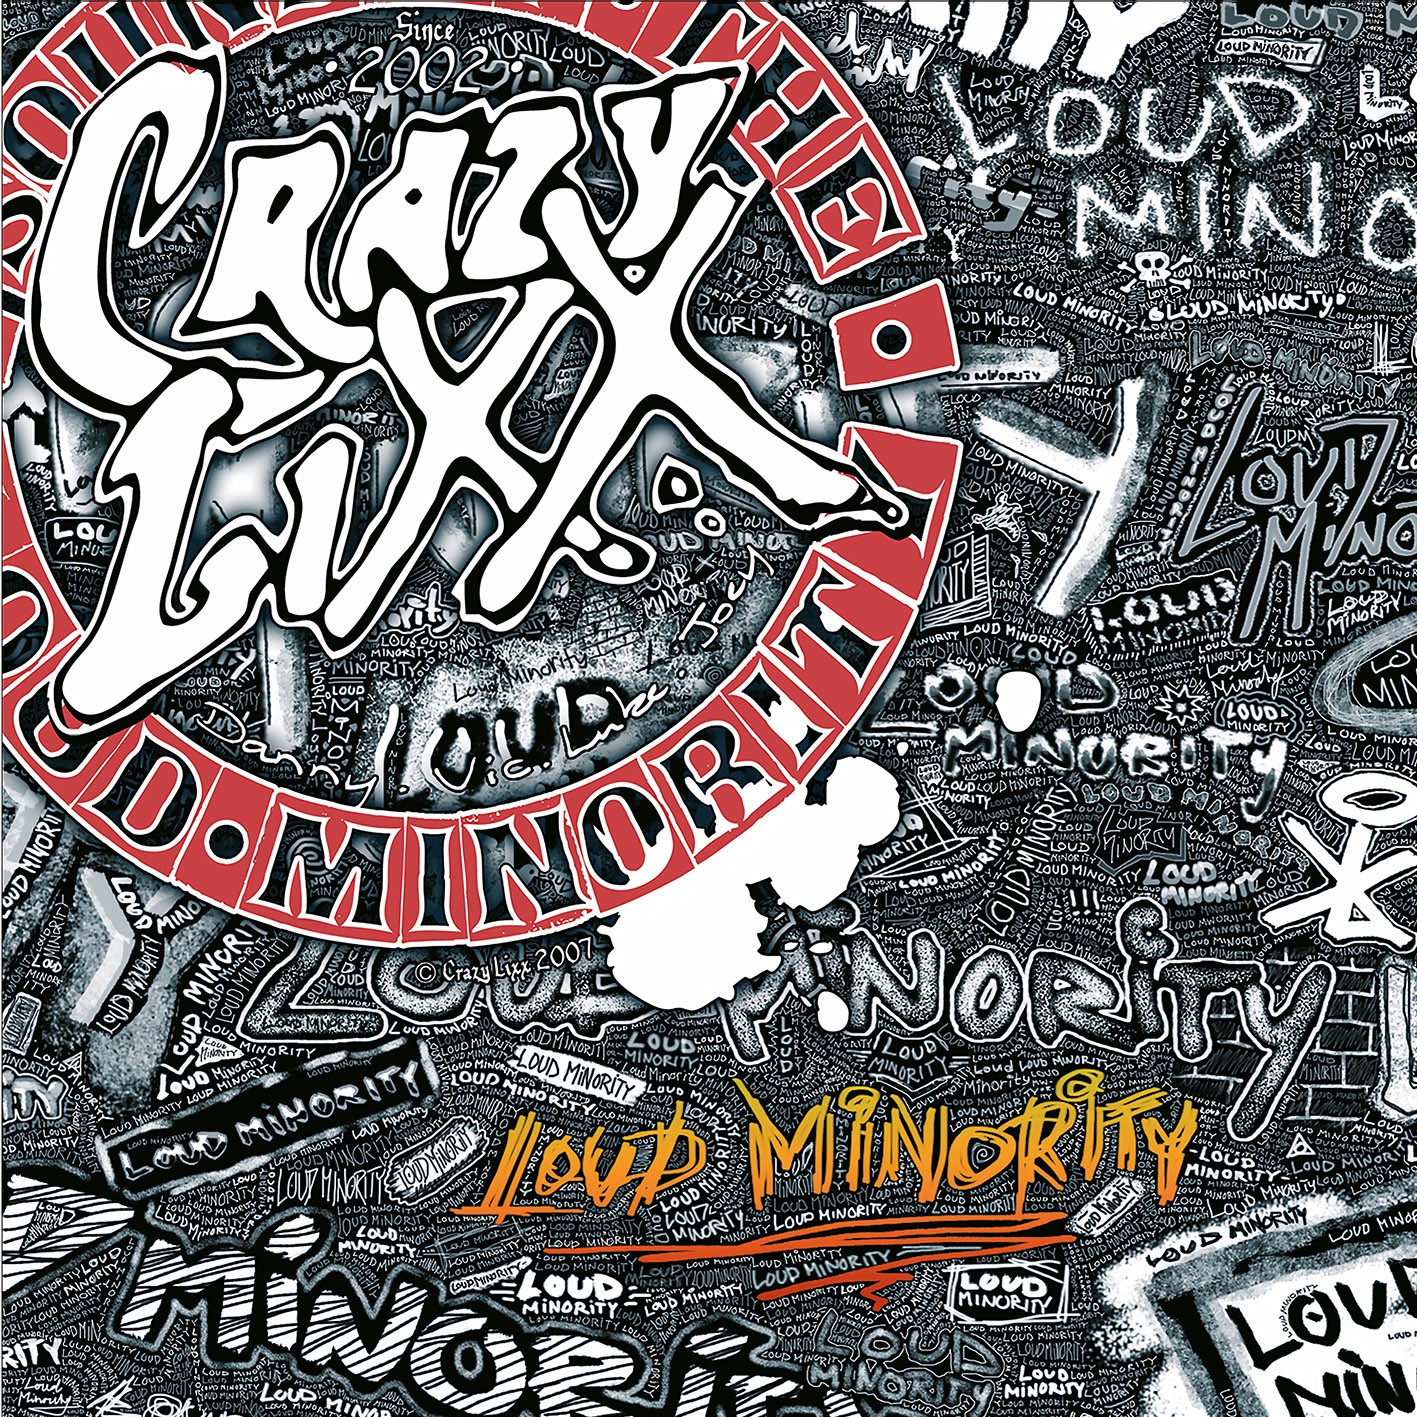 Crazy Lixx - Loud Minority - CD